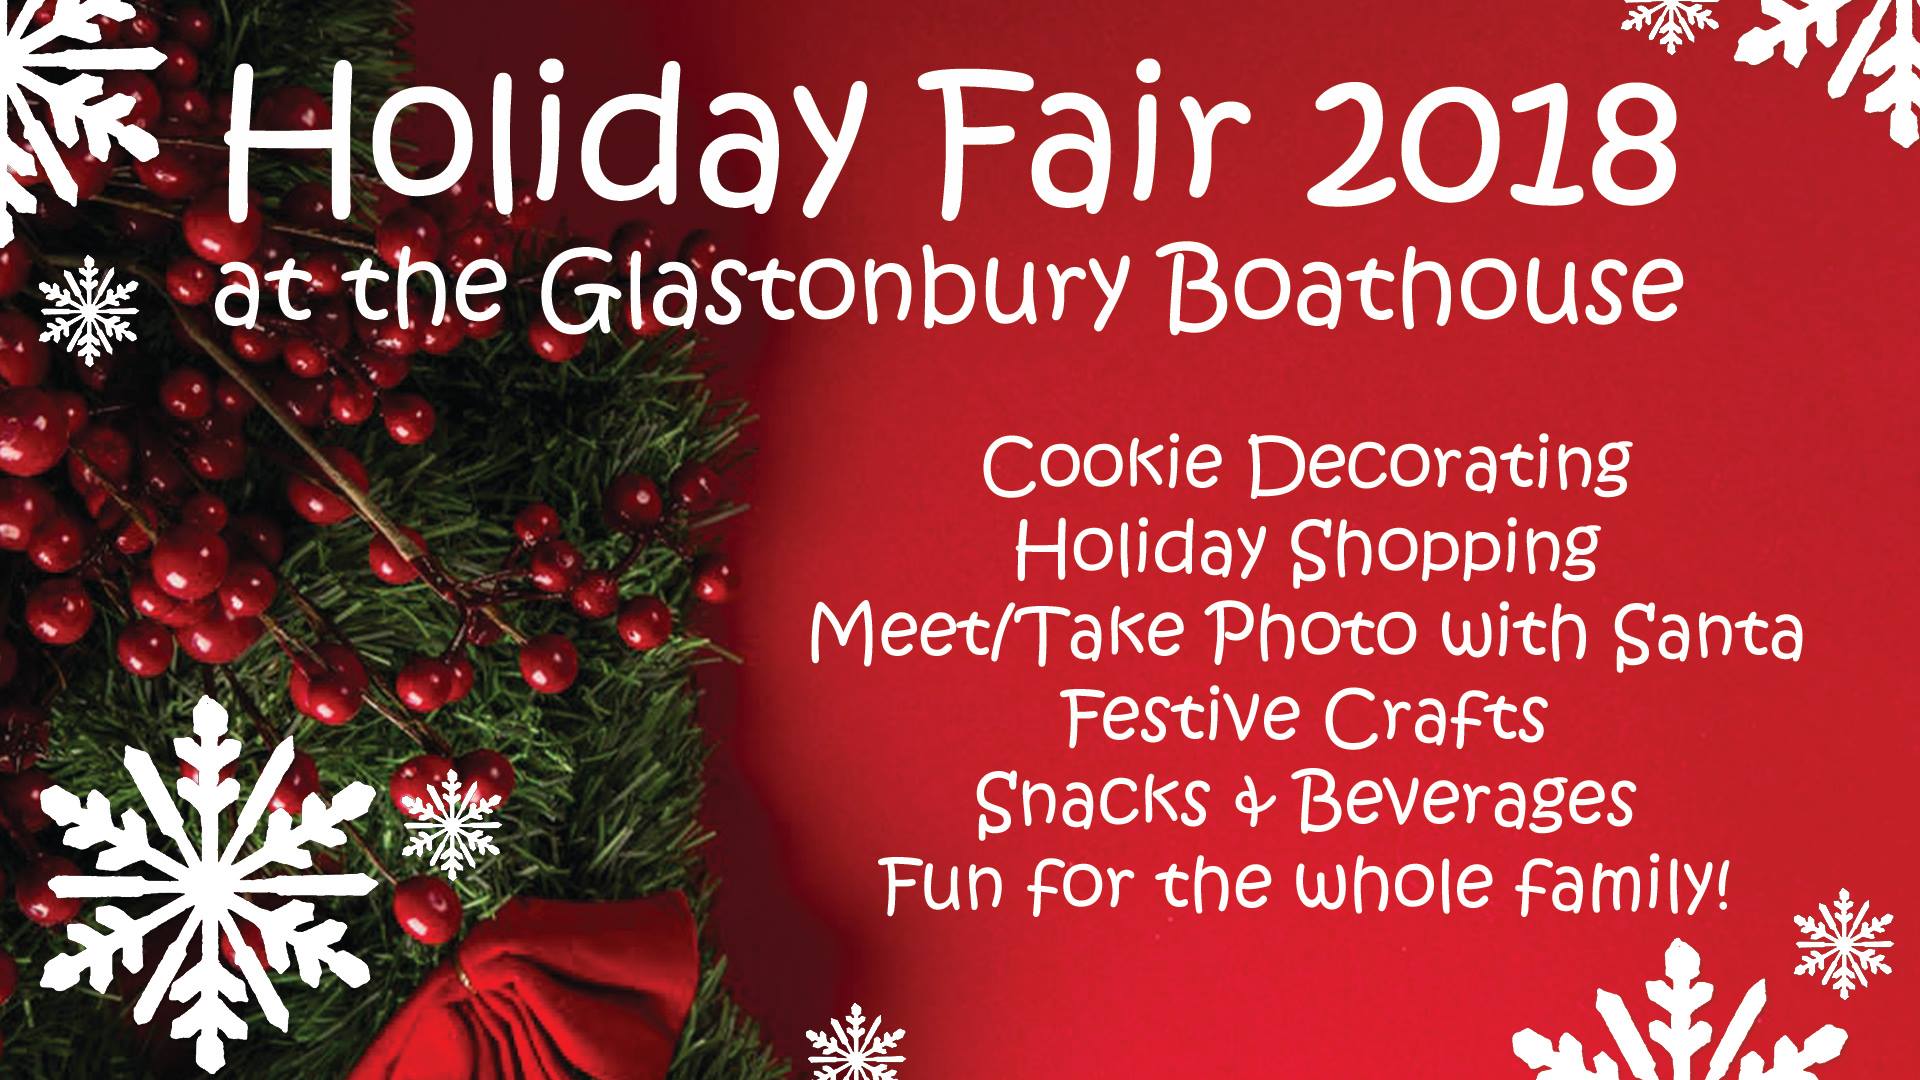 Holiday Fair at the Glastonbury Boathouse